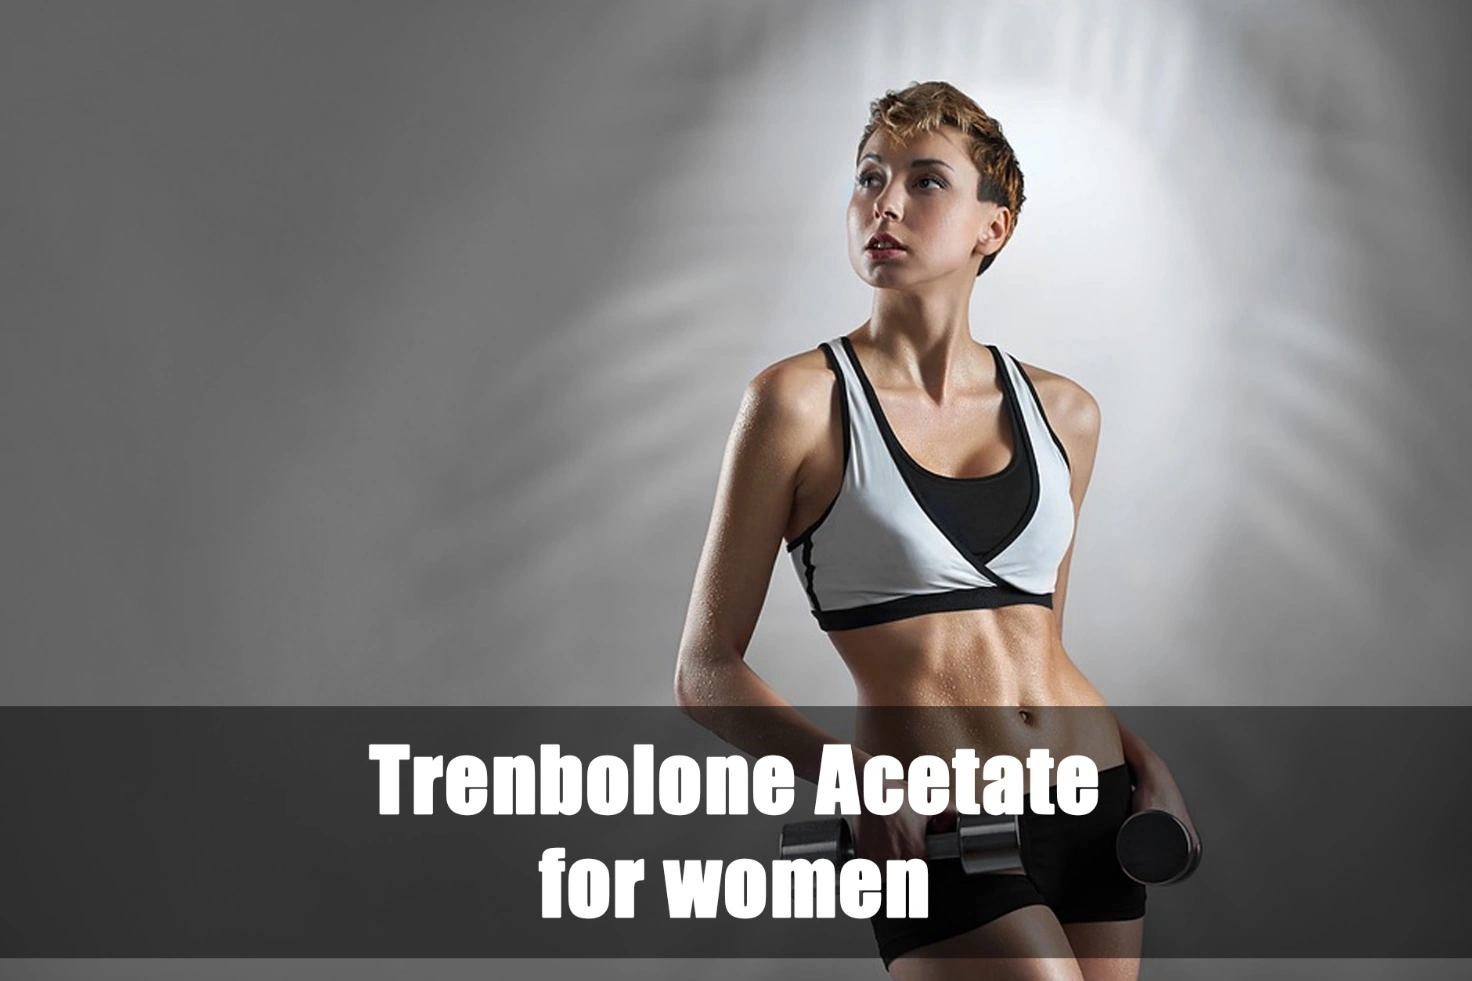 Trenbolone Acetate for women